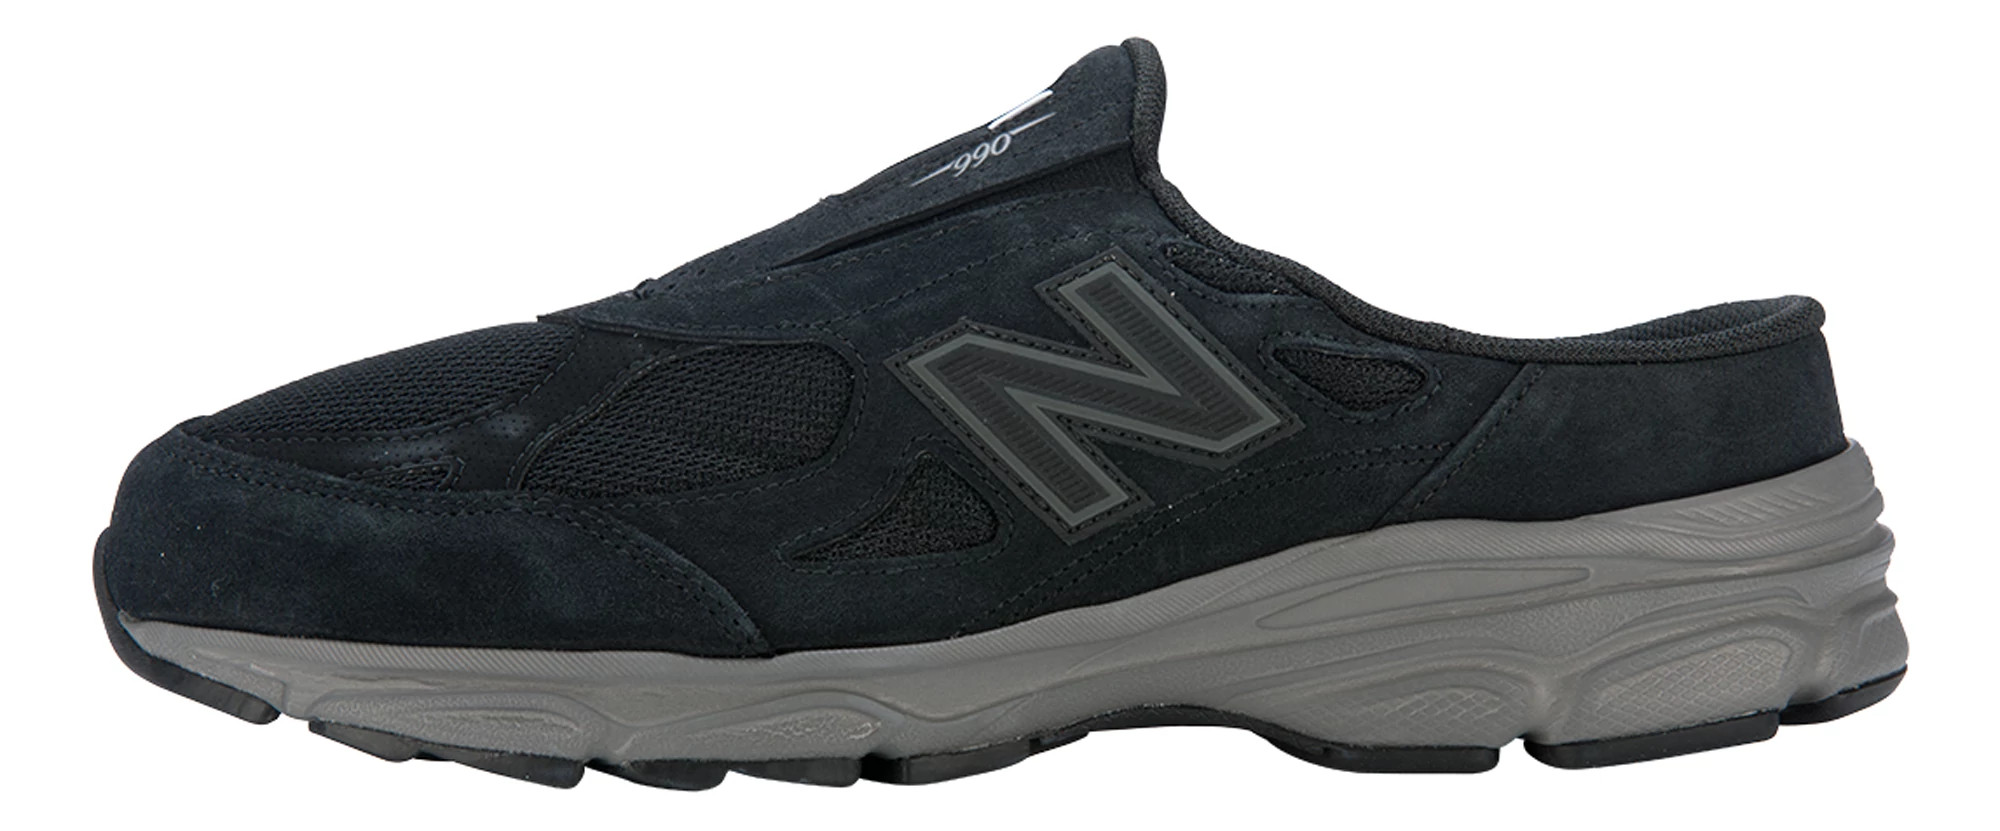 Mens New Balance 990v3 Slip-On Casual Shoe